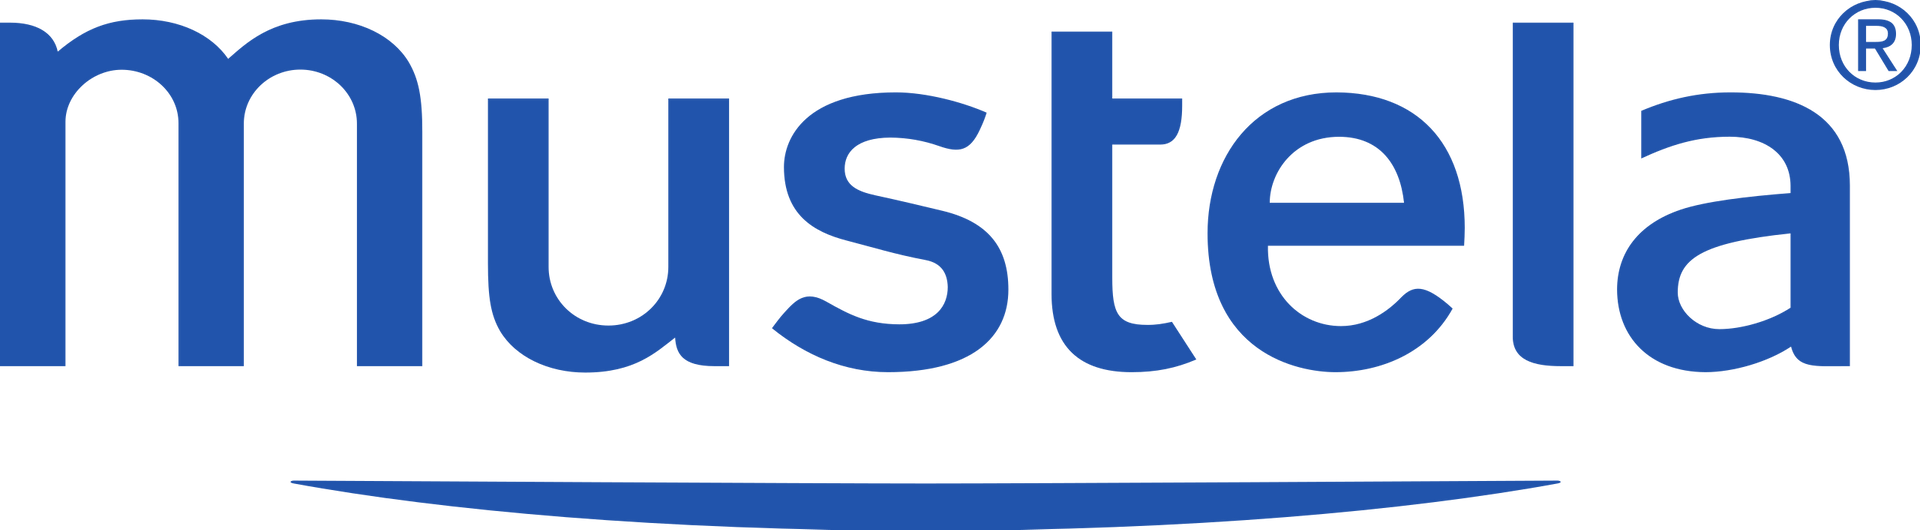 Logo Mustela